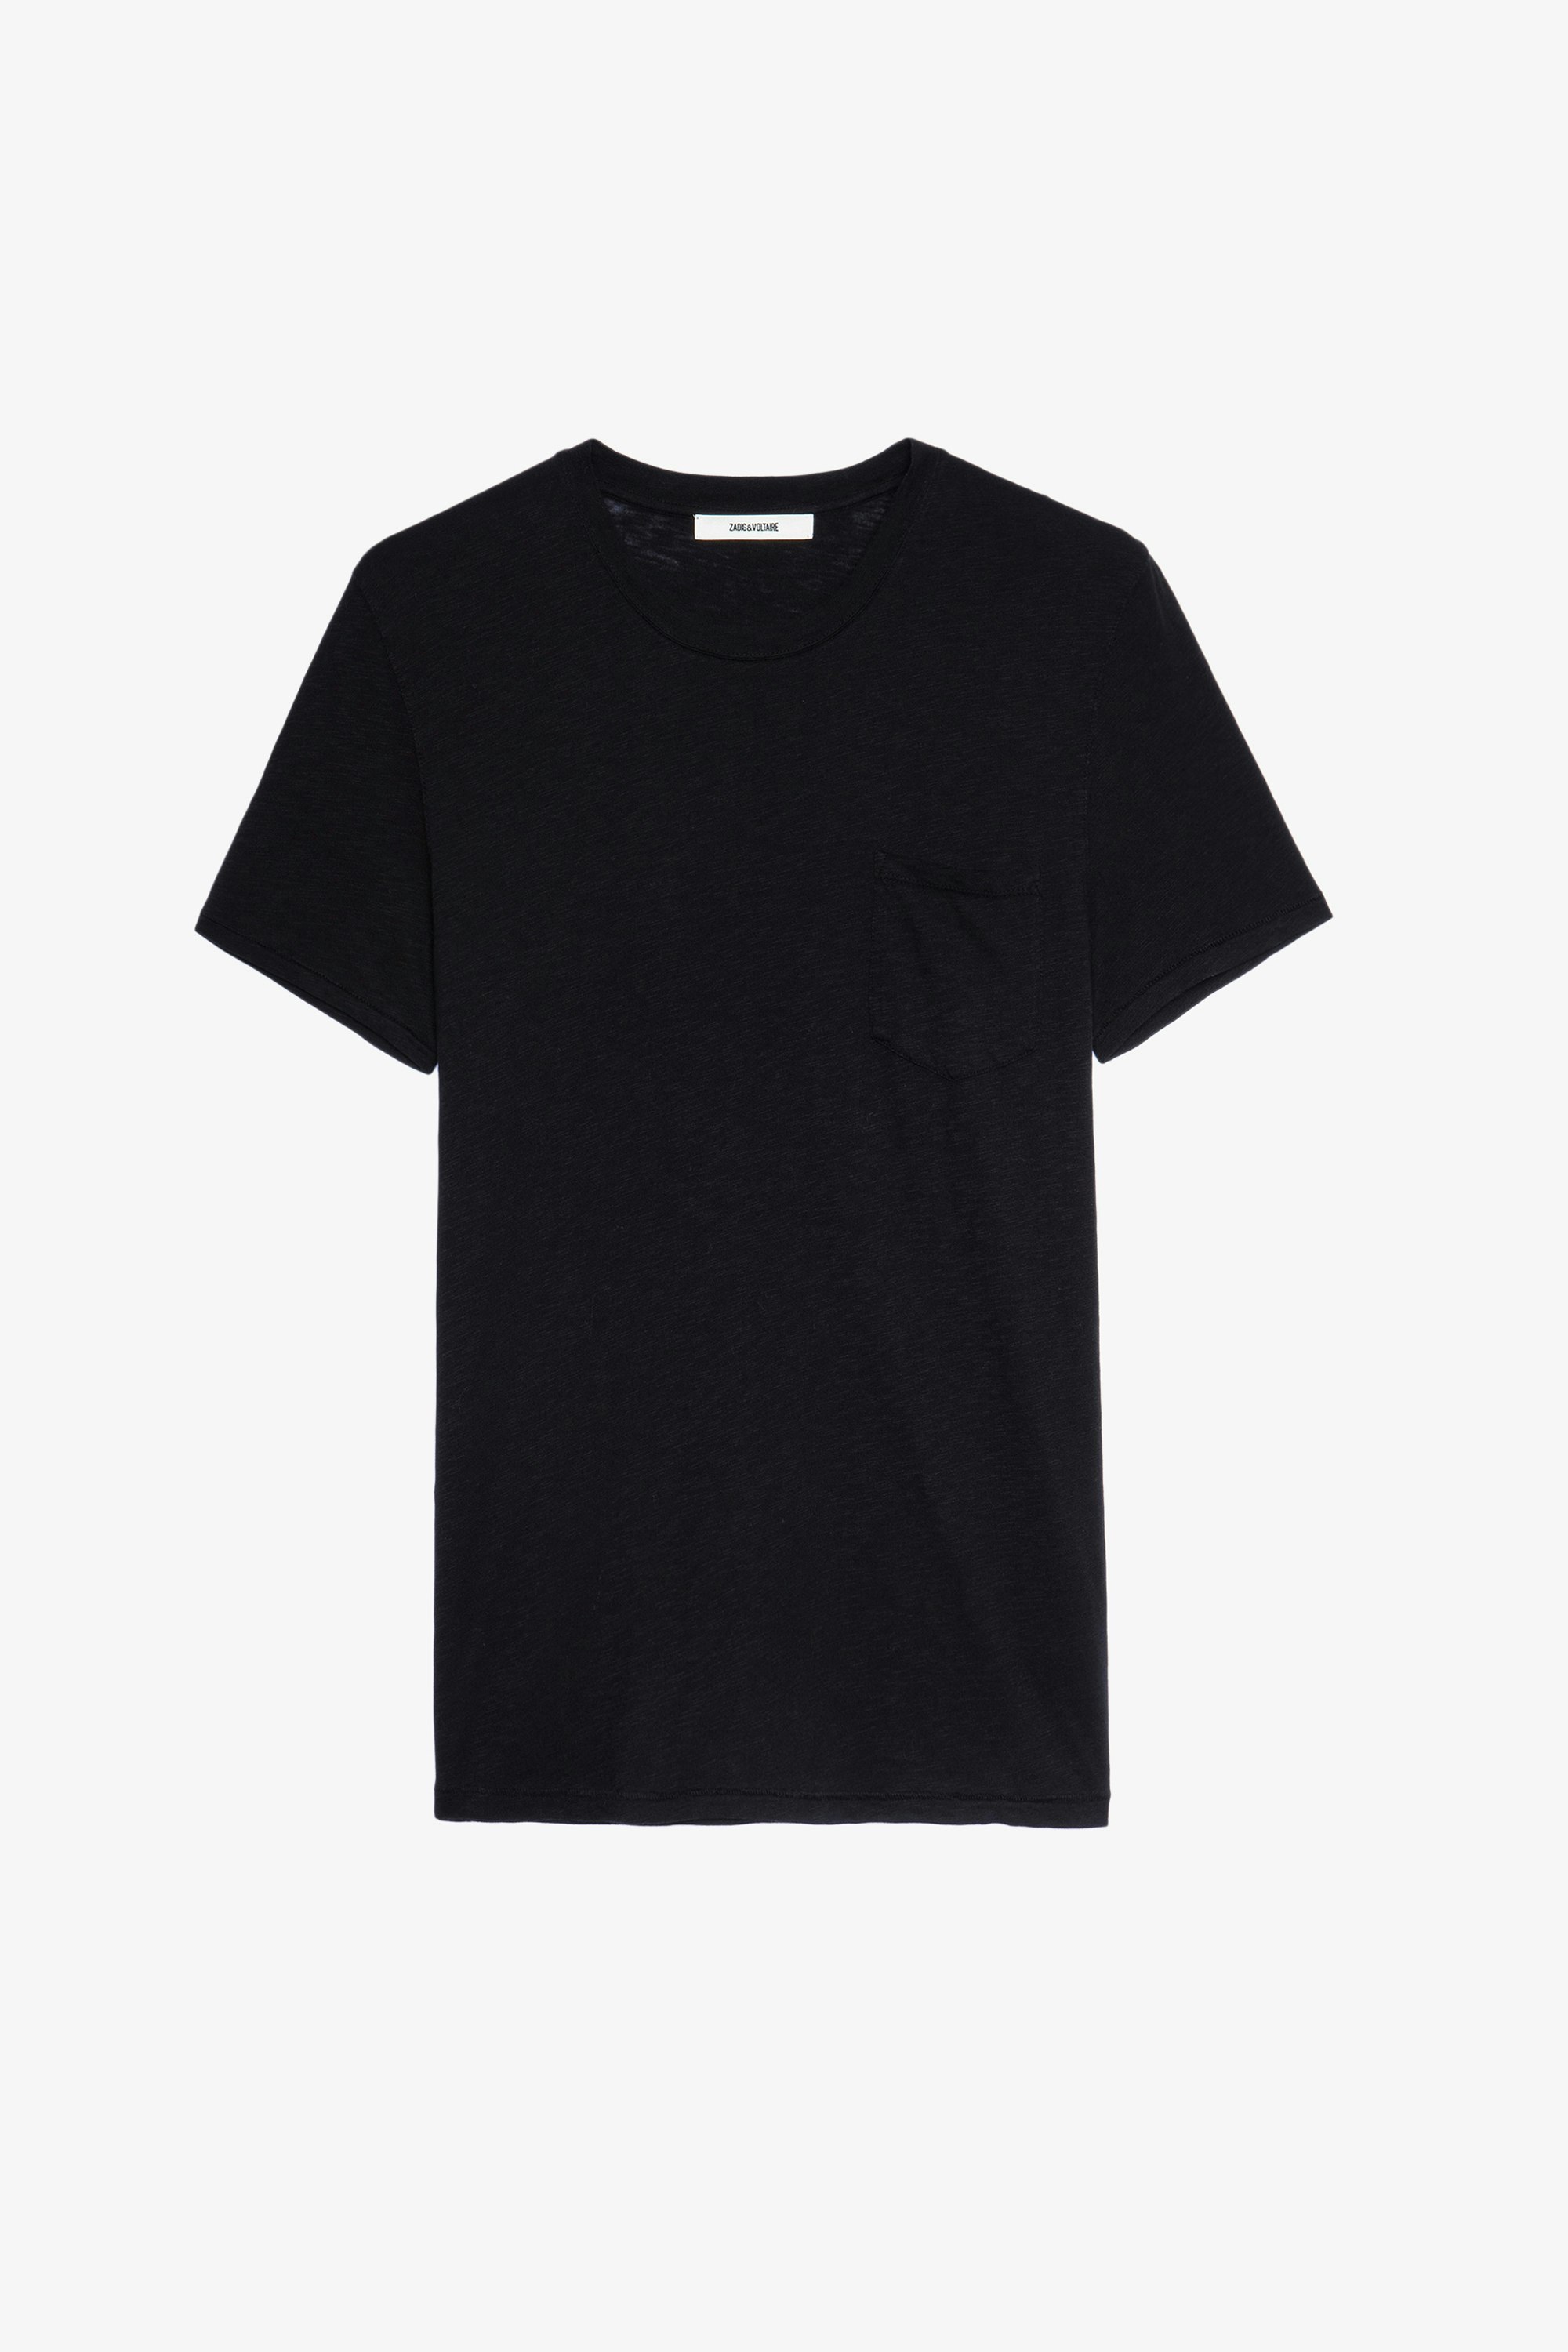 Camiseta Stockholm - Camiseta negra para hombre con cuello redondo.